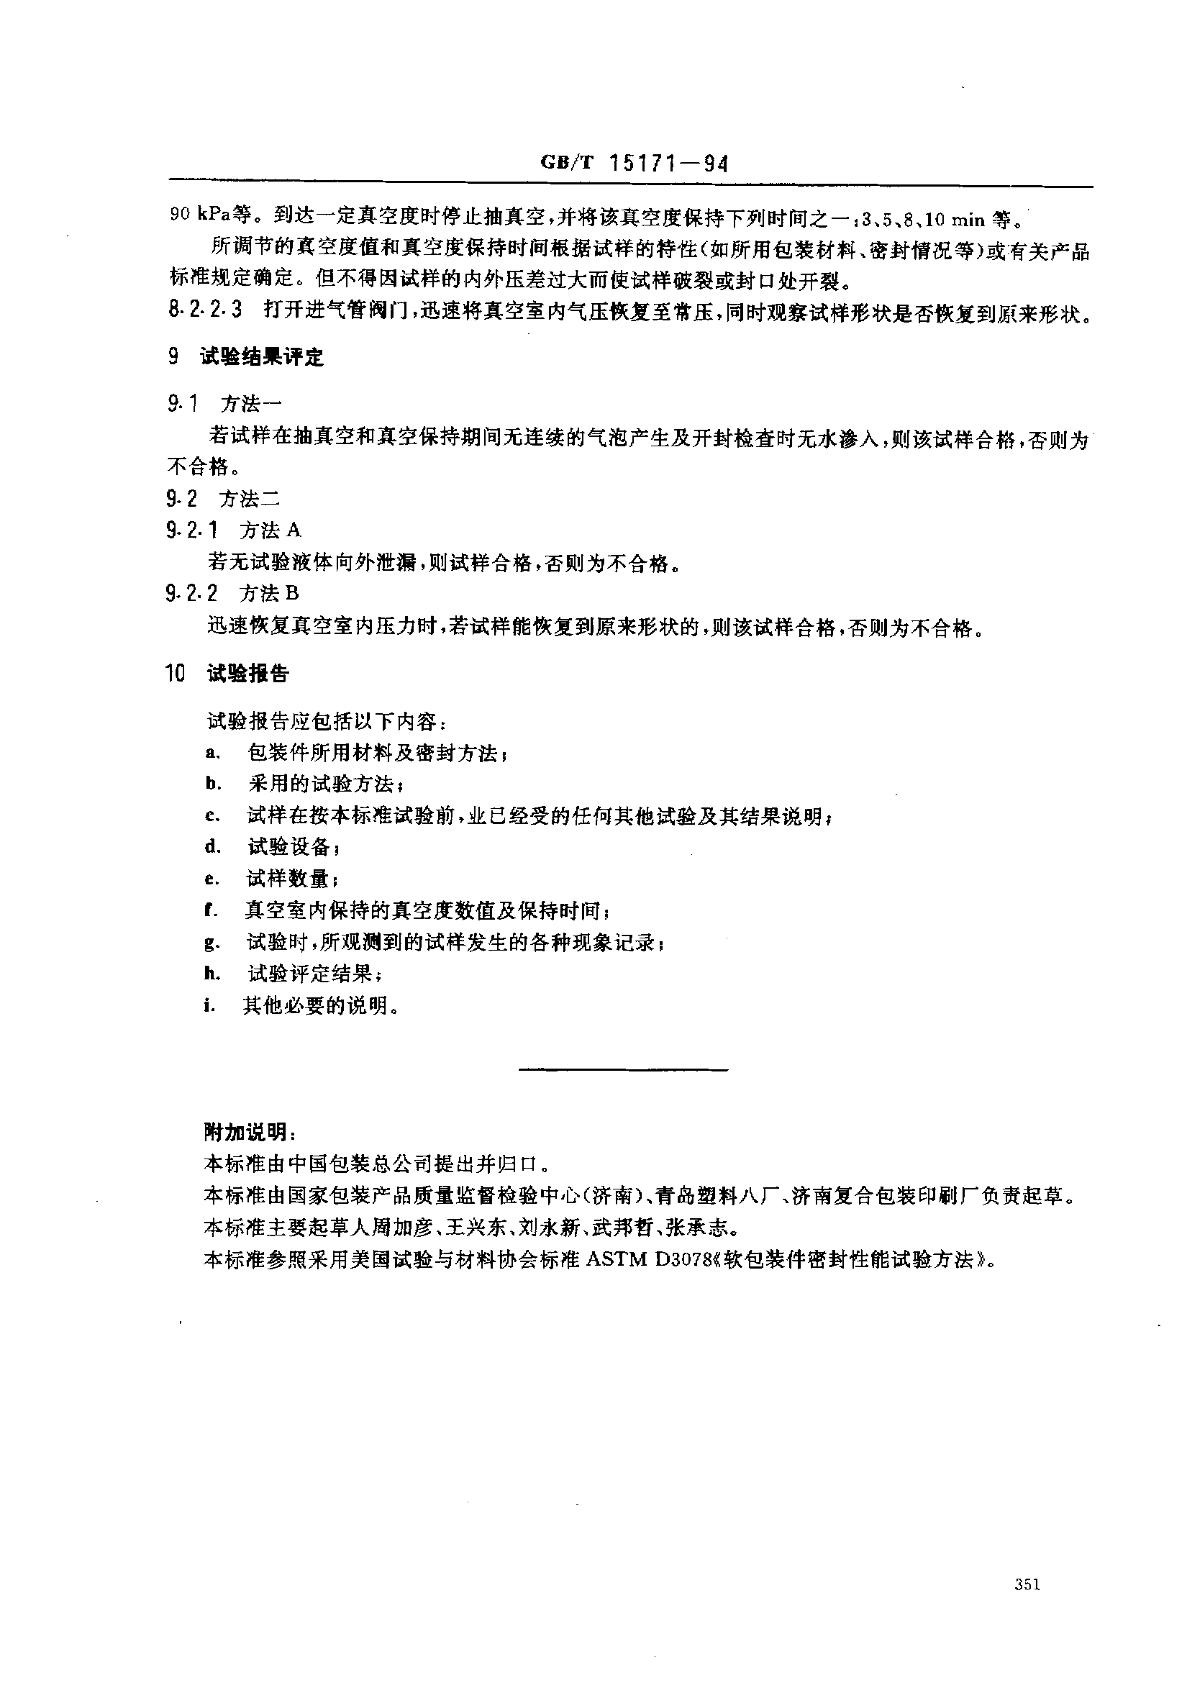 GB/T 15171-1994 《软包装件密封性能试验方法》第3页